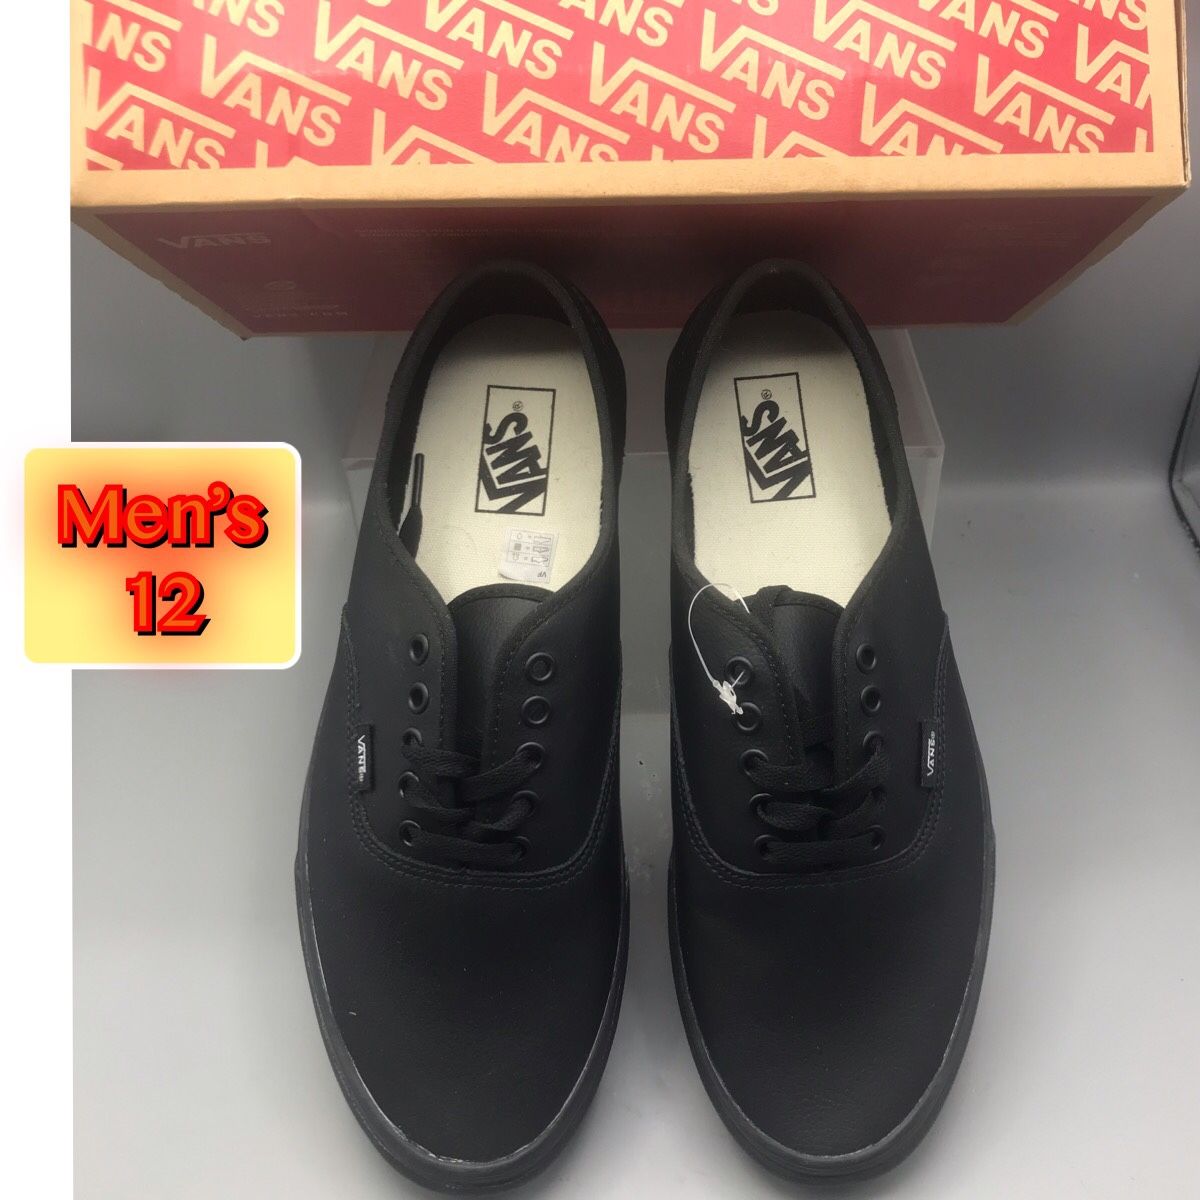 Vans Men's Chimo Pro Black Sneakers size 12